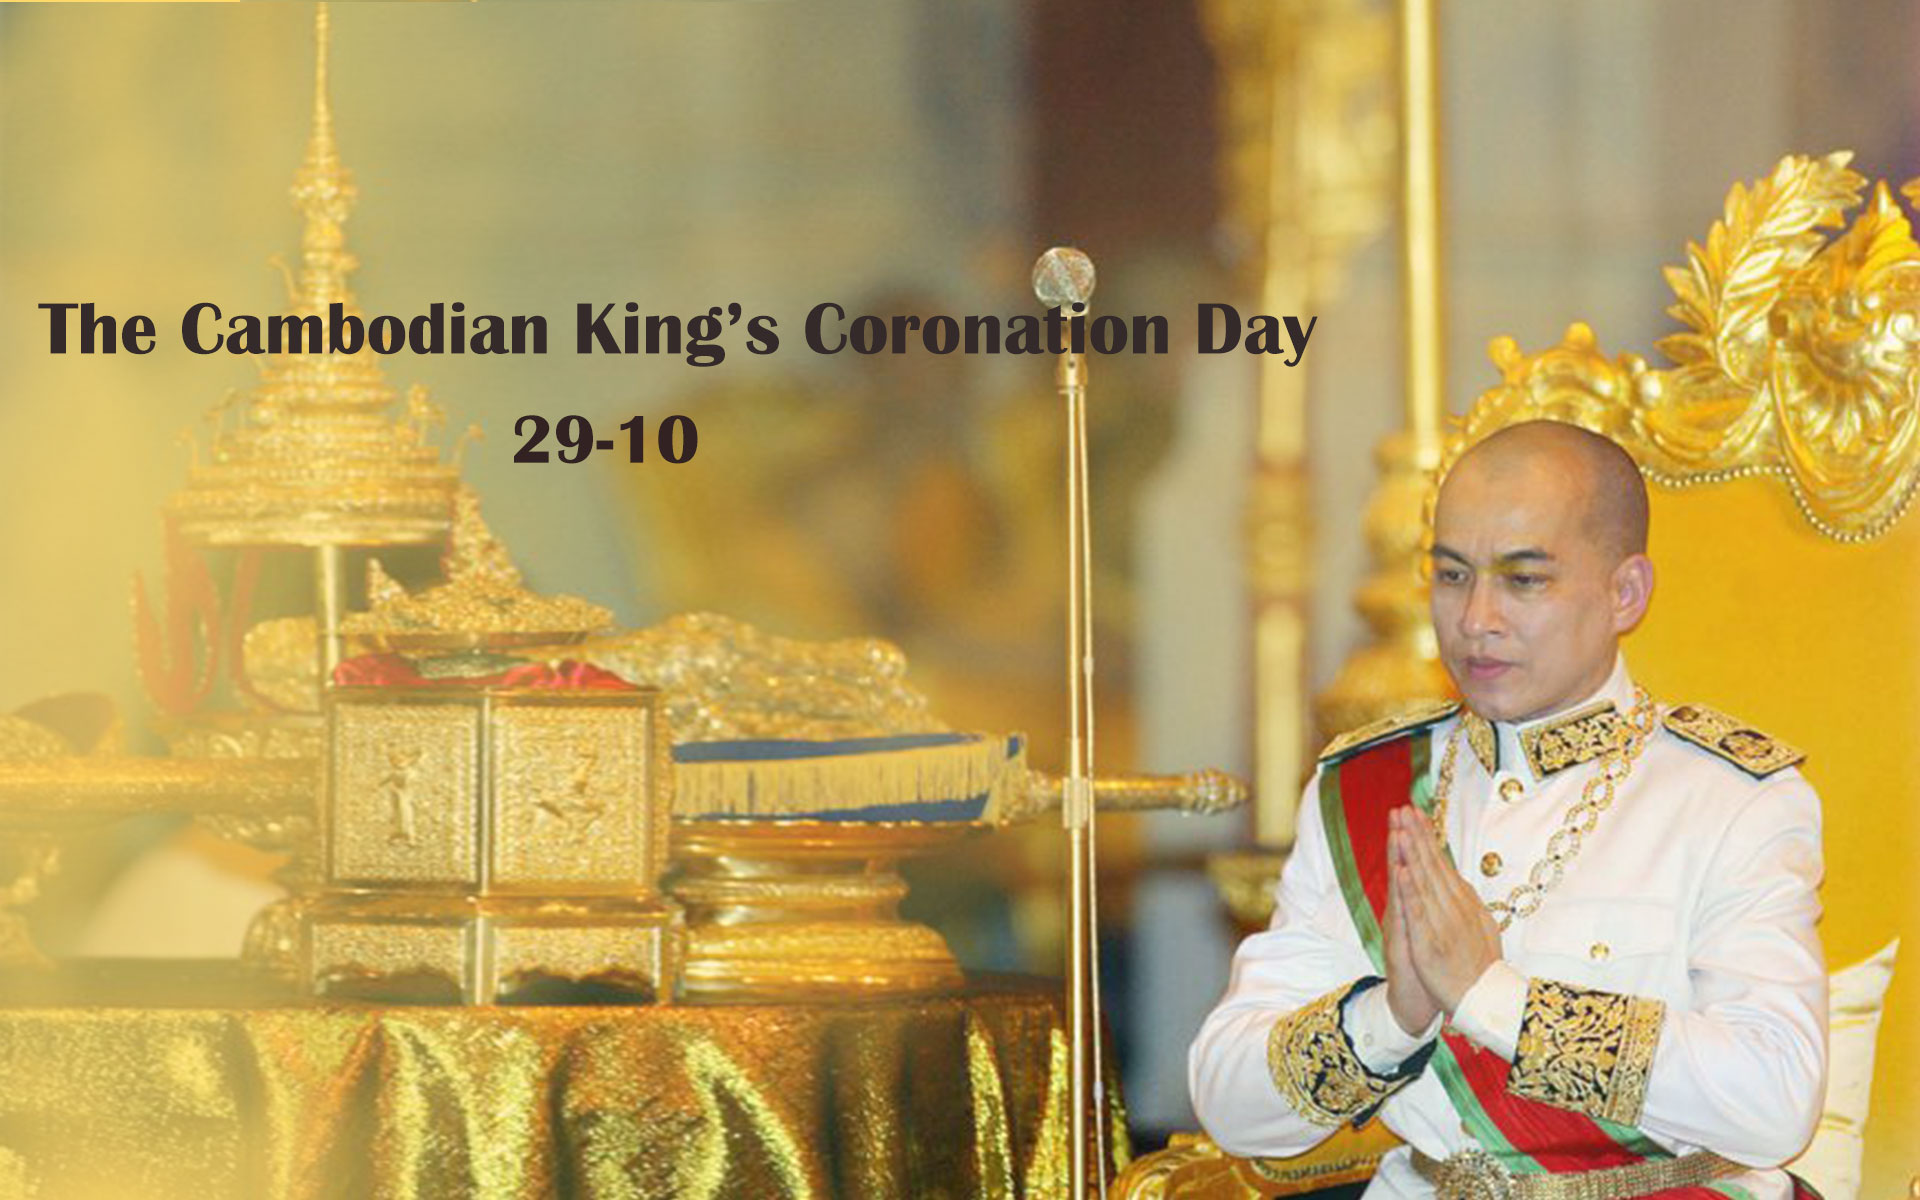 King Norodom Sihamoni